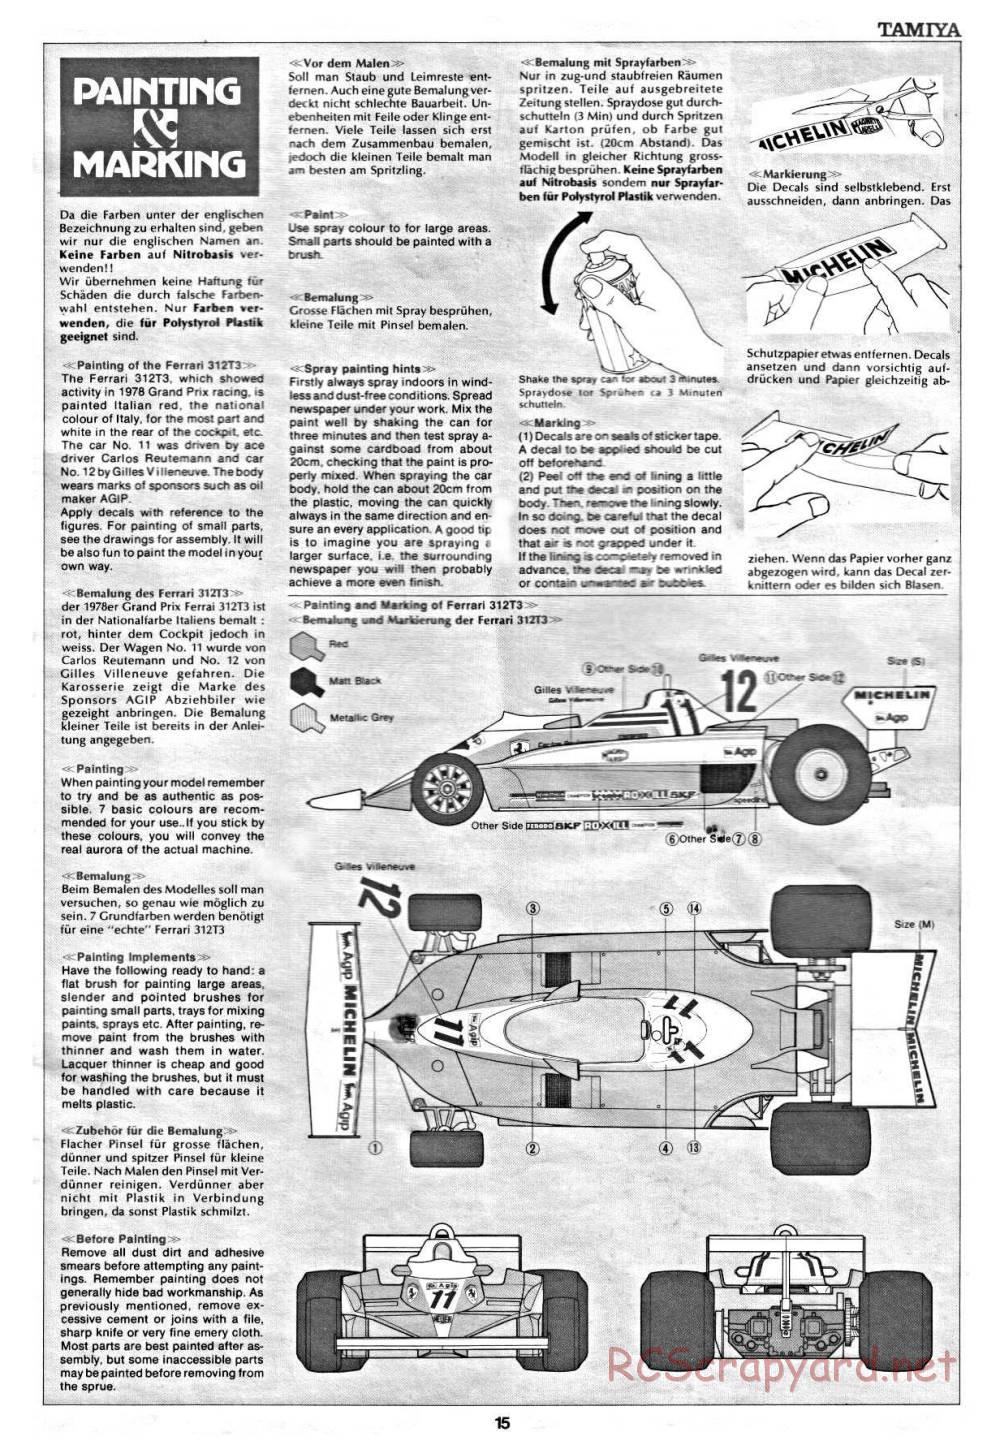 Tamiya - Ferrari 312T3 - 58011 - Manual - Page 15